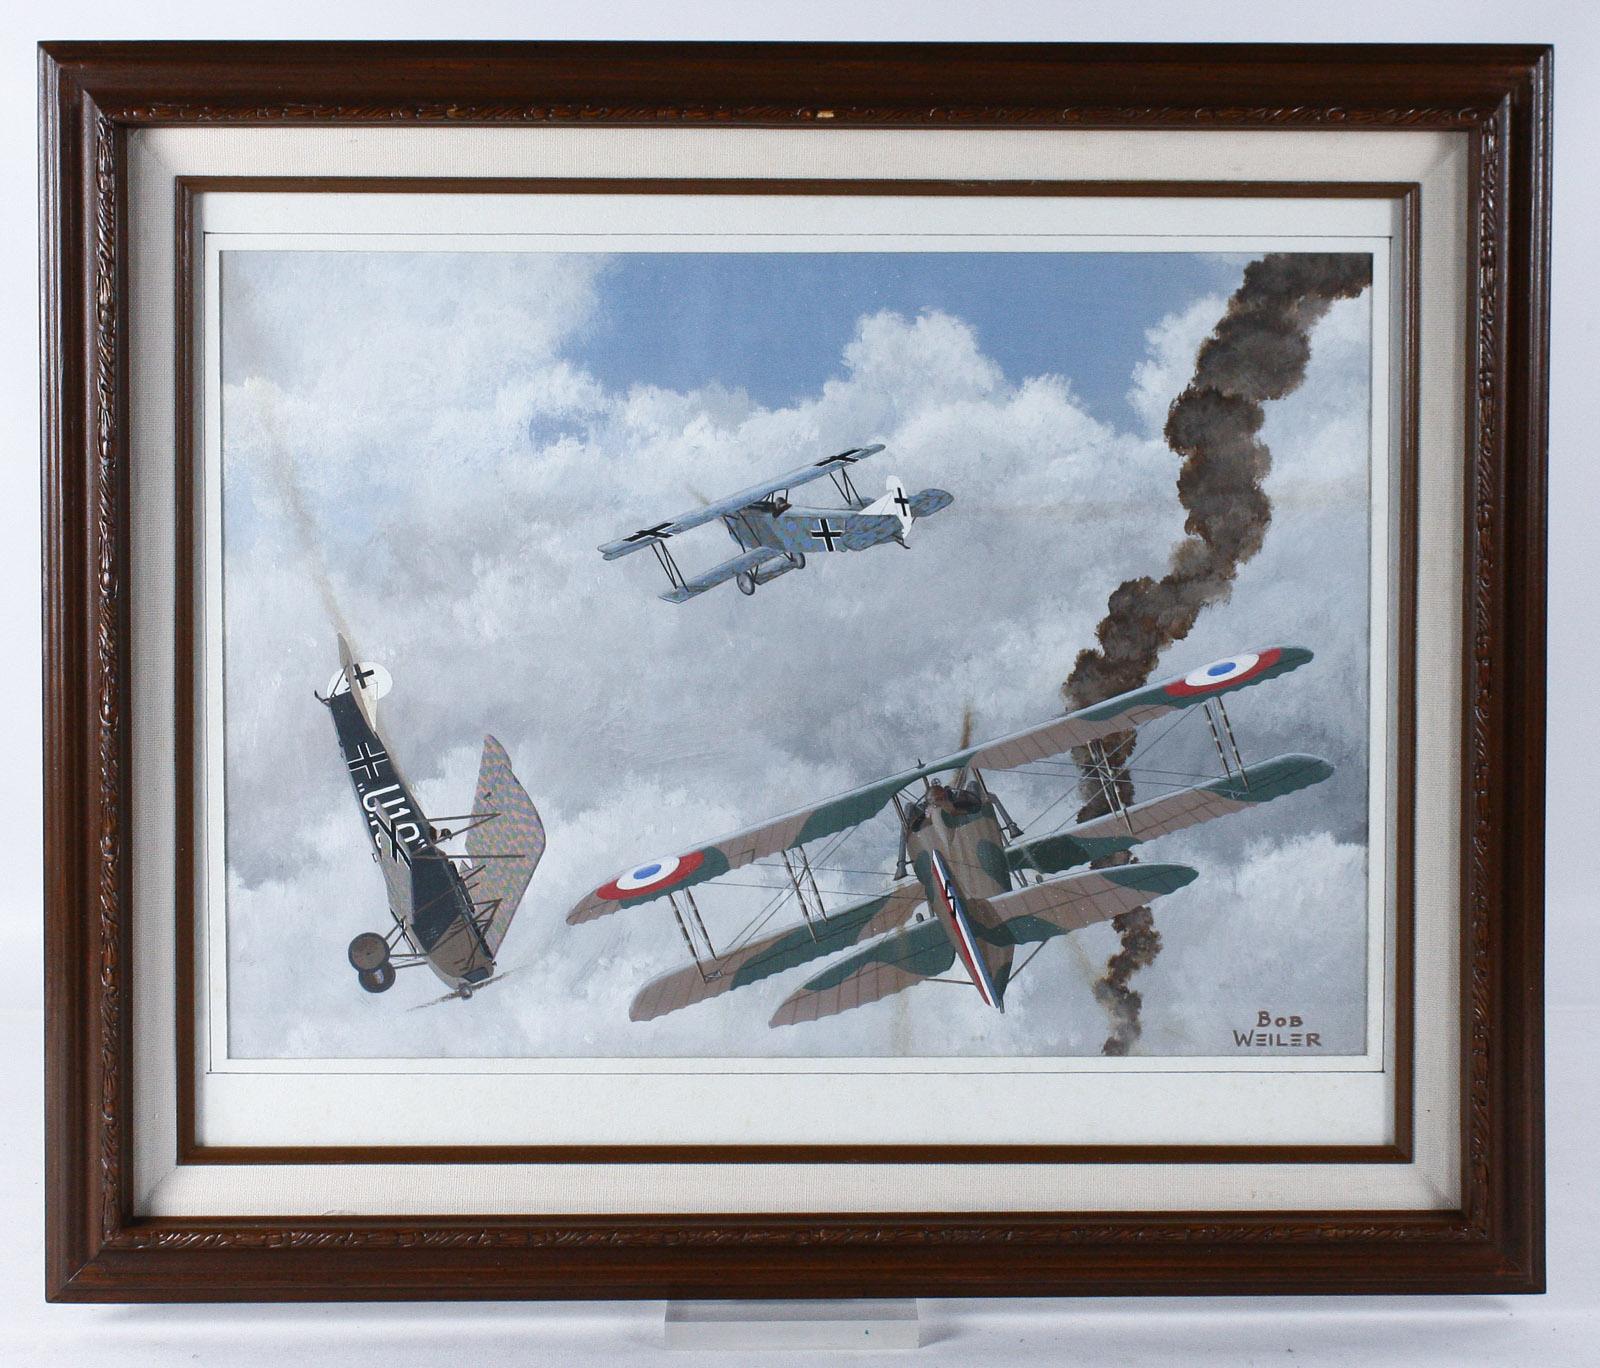 Bob Weiler "Spad 13 vs Fokker D7s" Painting